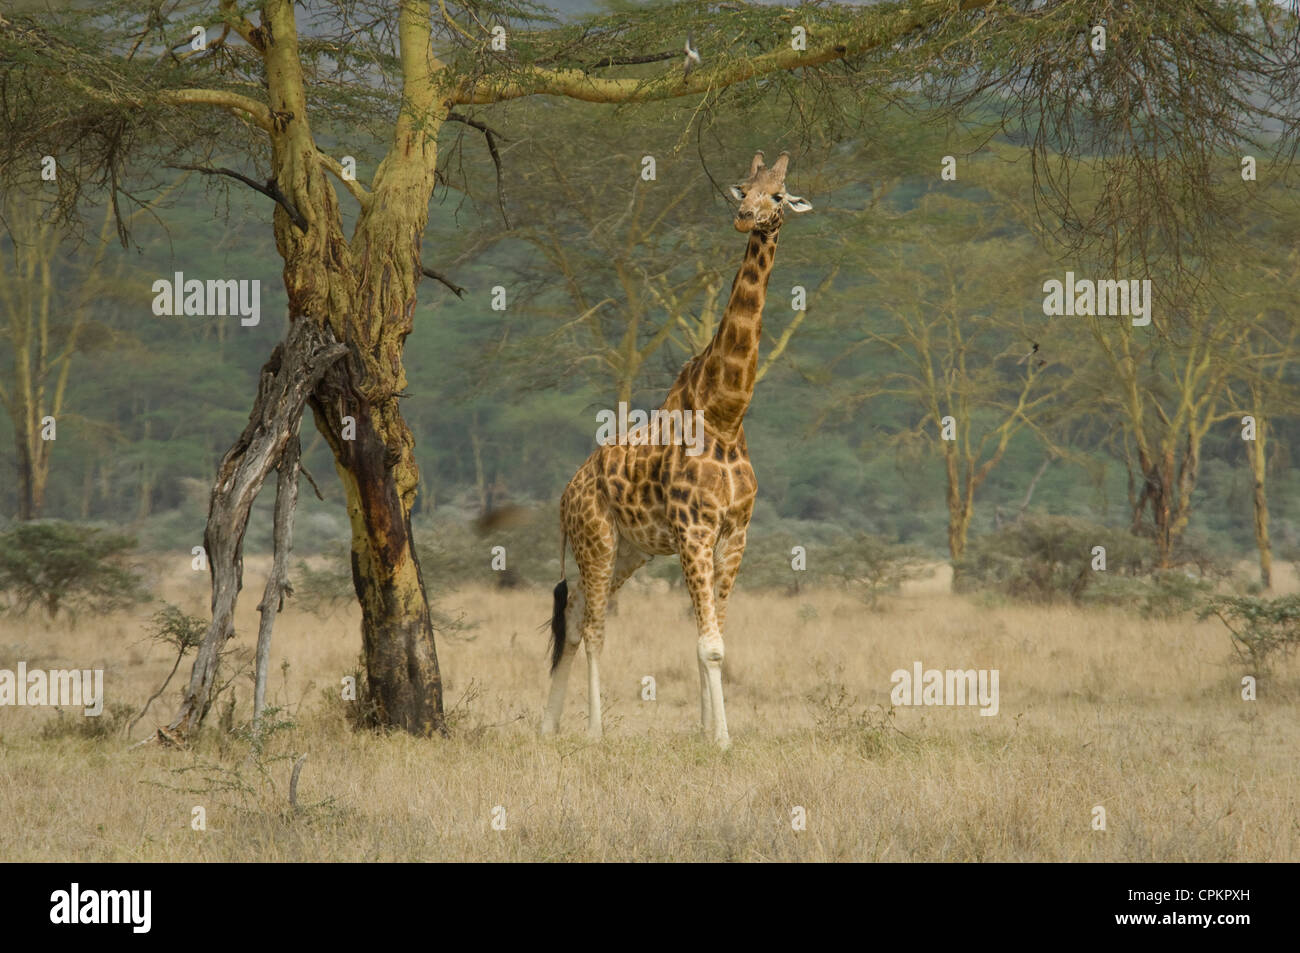 Rothschild's giraffe by Yellow-barked acacia tree Stock Photo